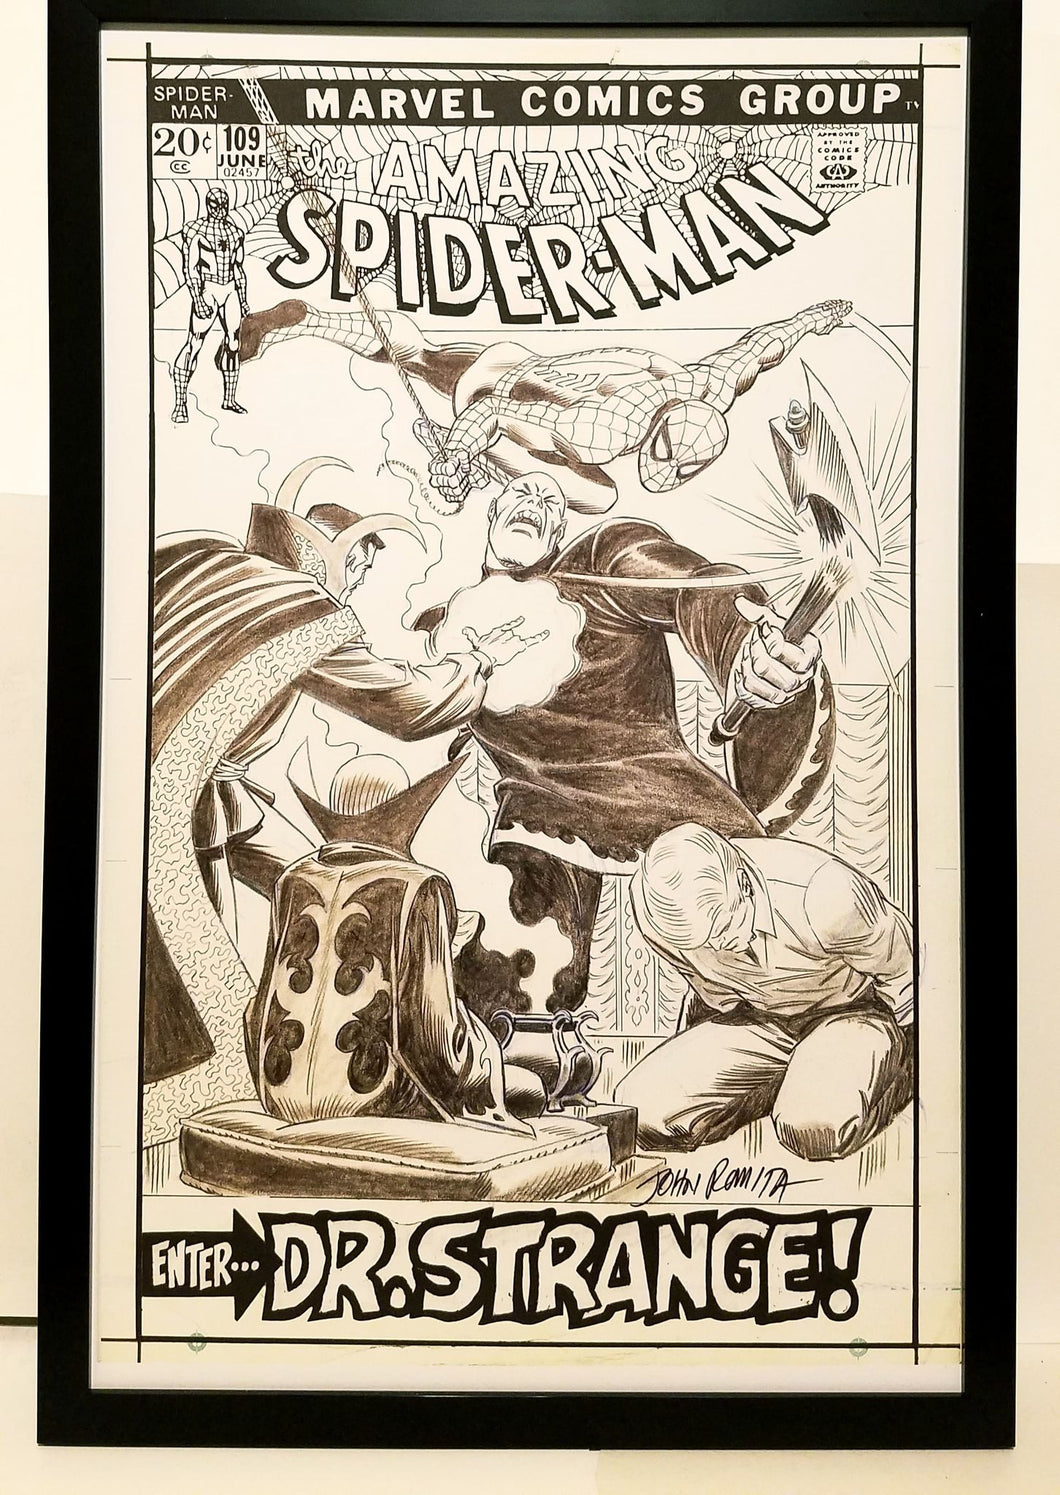 Amazing Spider-Man #109 by John Romita 11x17 FRAMED Original Art Poster Marvel Comics Poster